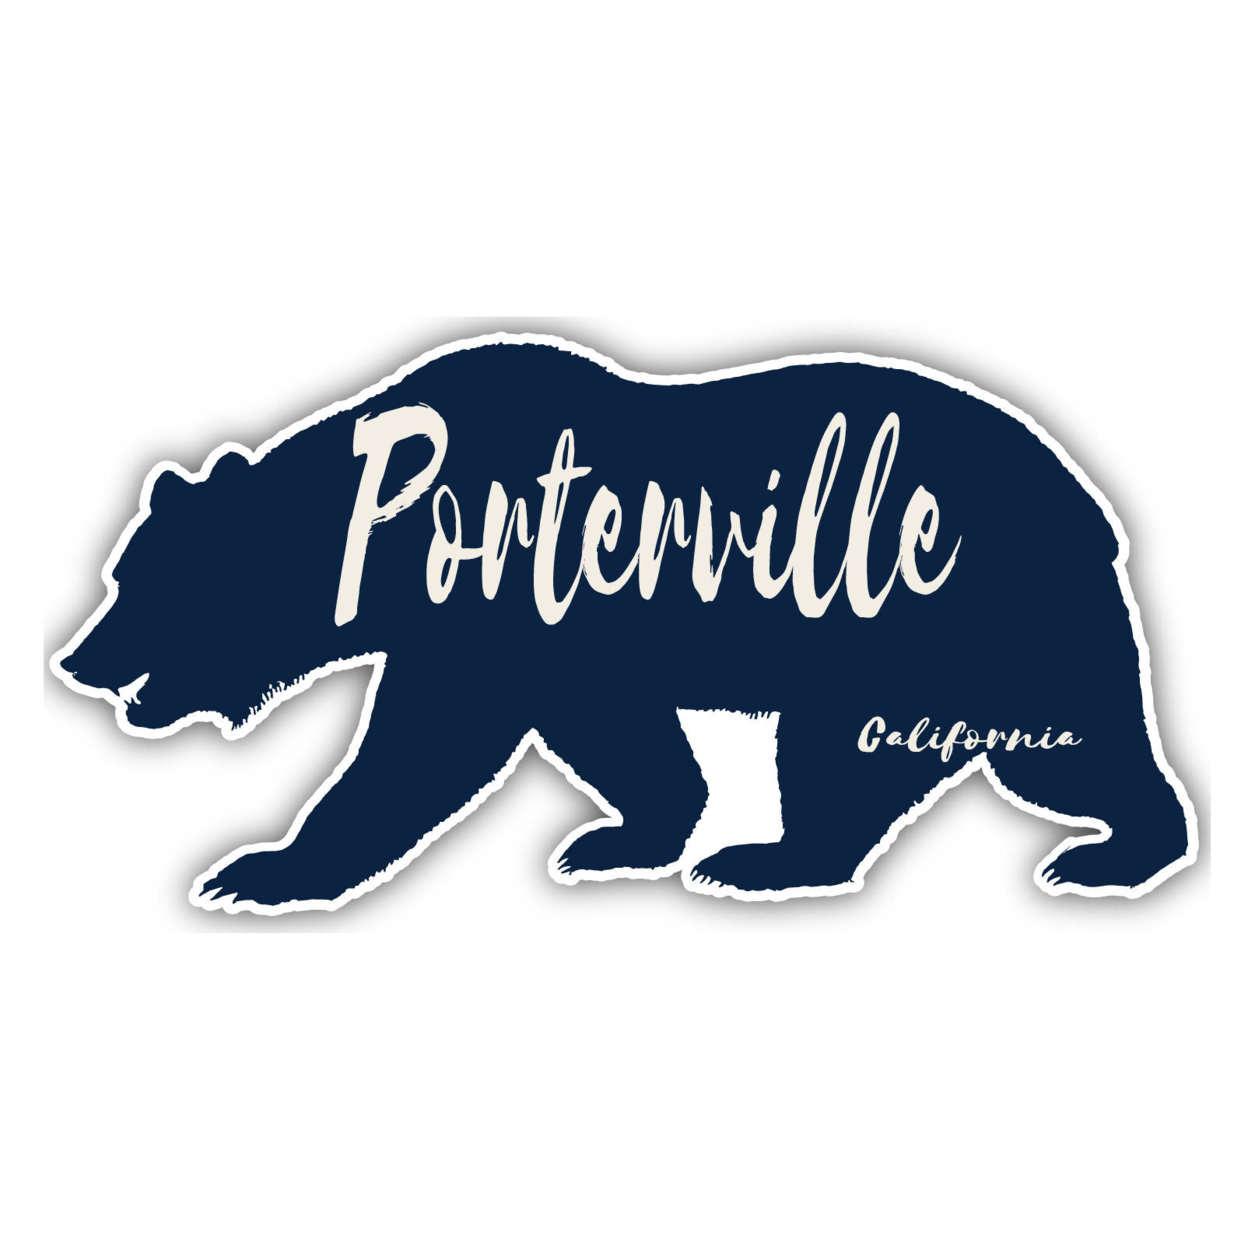 Porterville California Souvenir Decorative Stickers (Choose Theme And Size) - Single Unit, 4-Inch, Bear